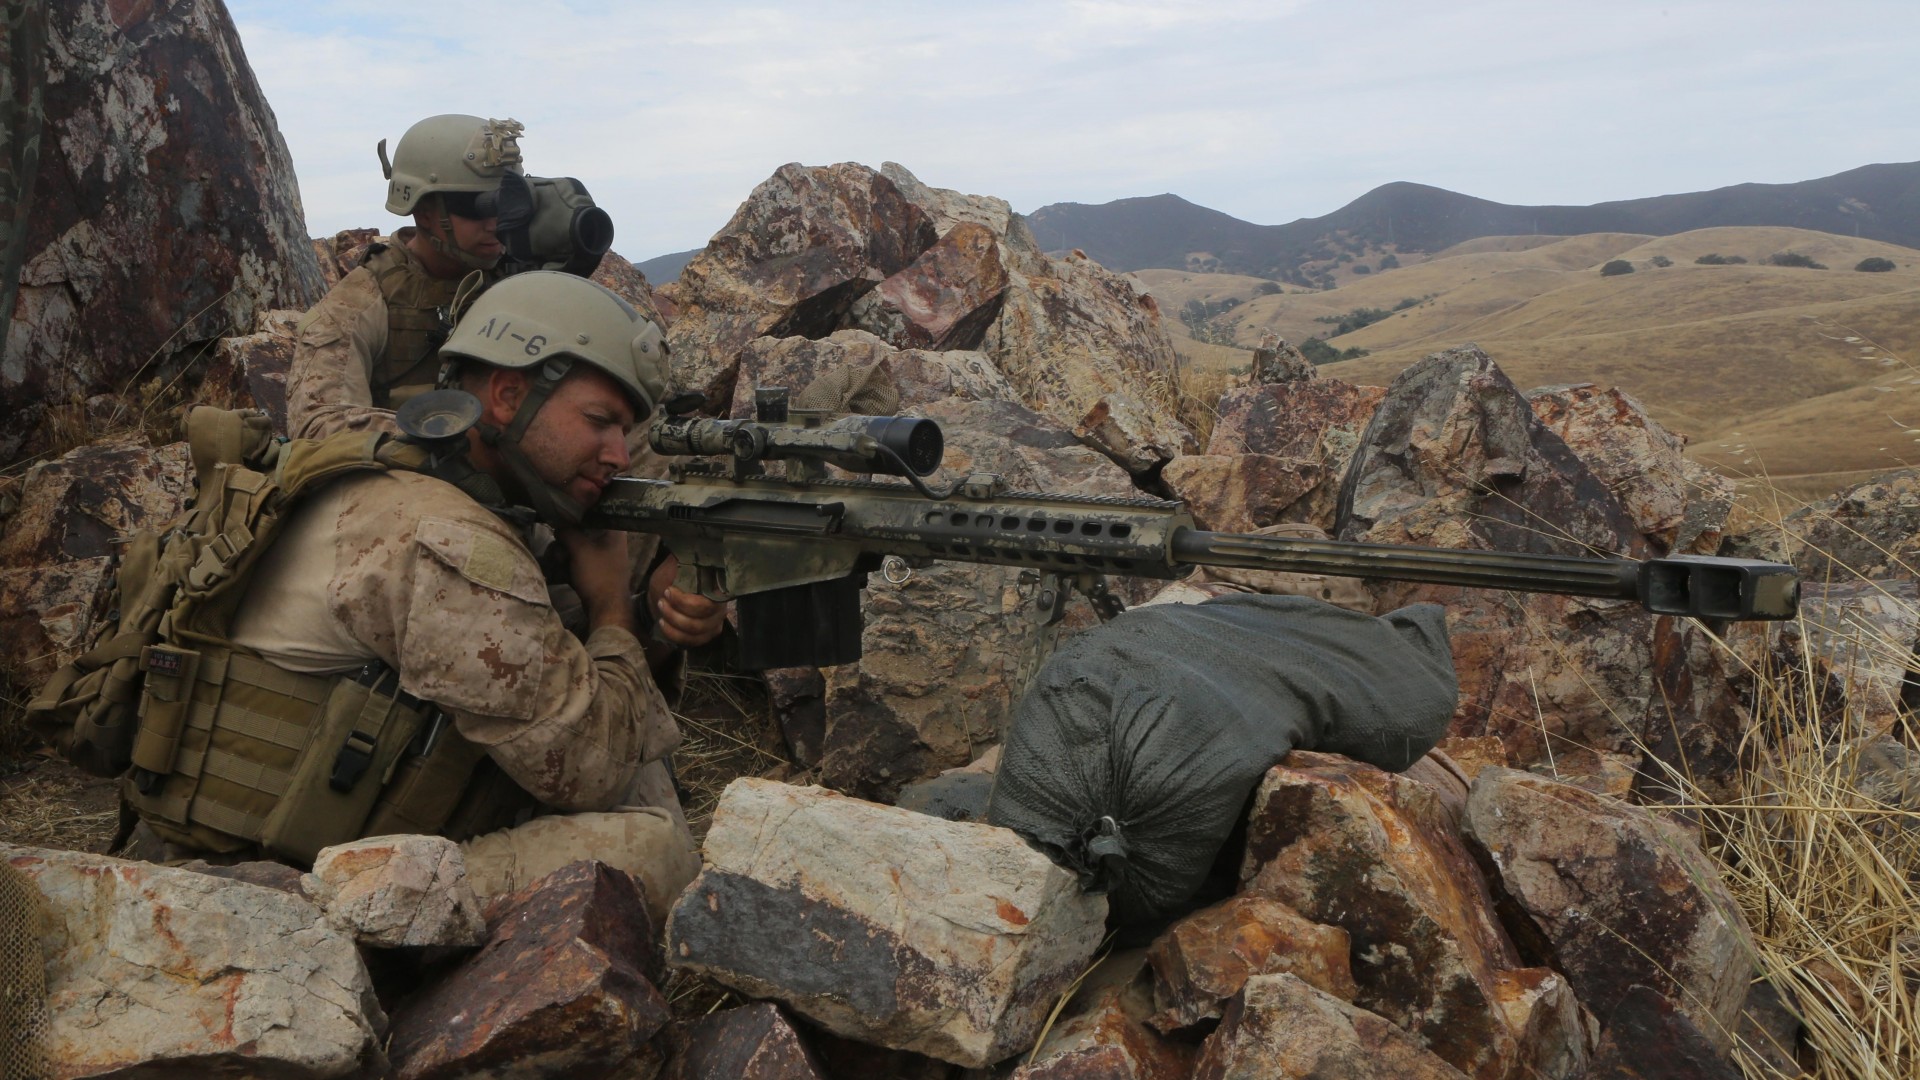 Barrett, sniper, M82A1, sniper rifle, M82, М107, Light fifty, U.S. Army, scope, mountain (horizontal)